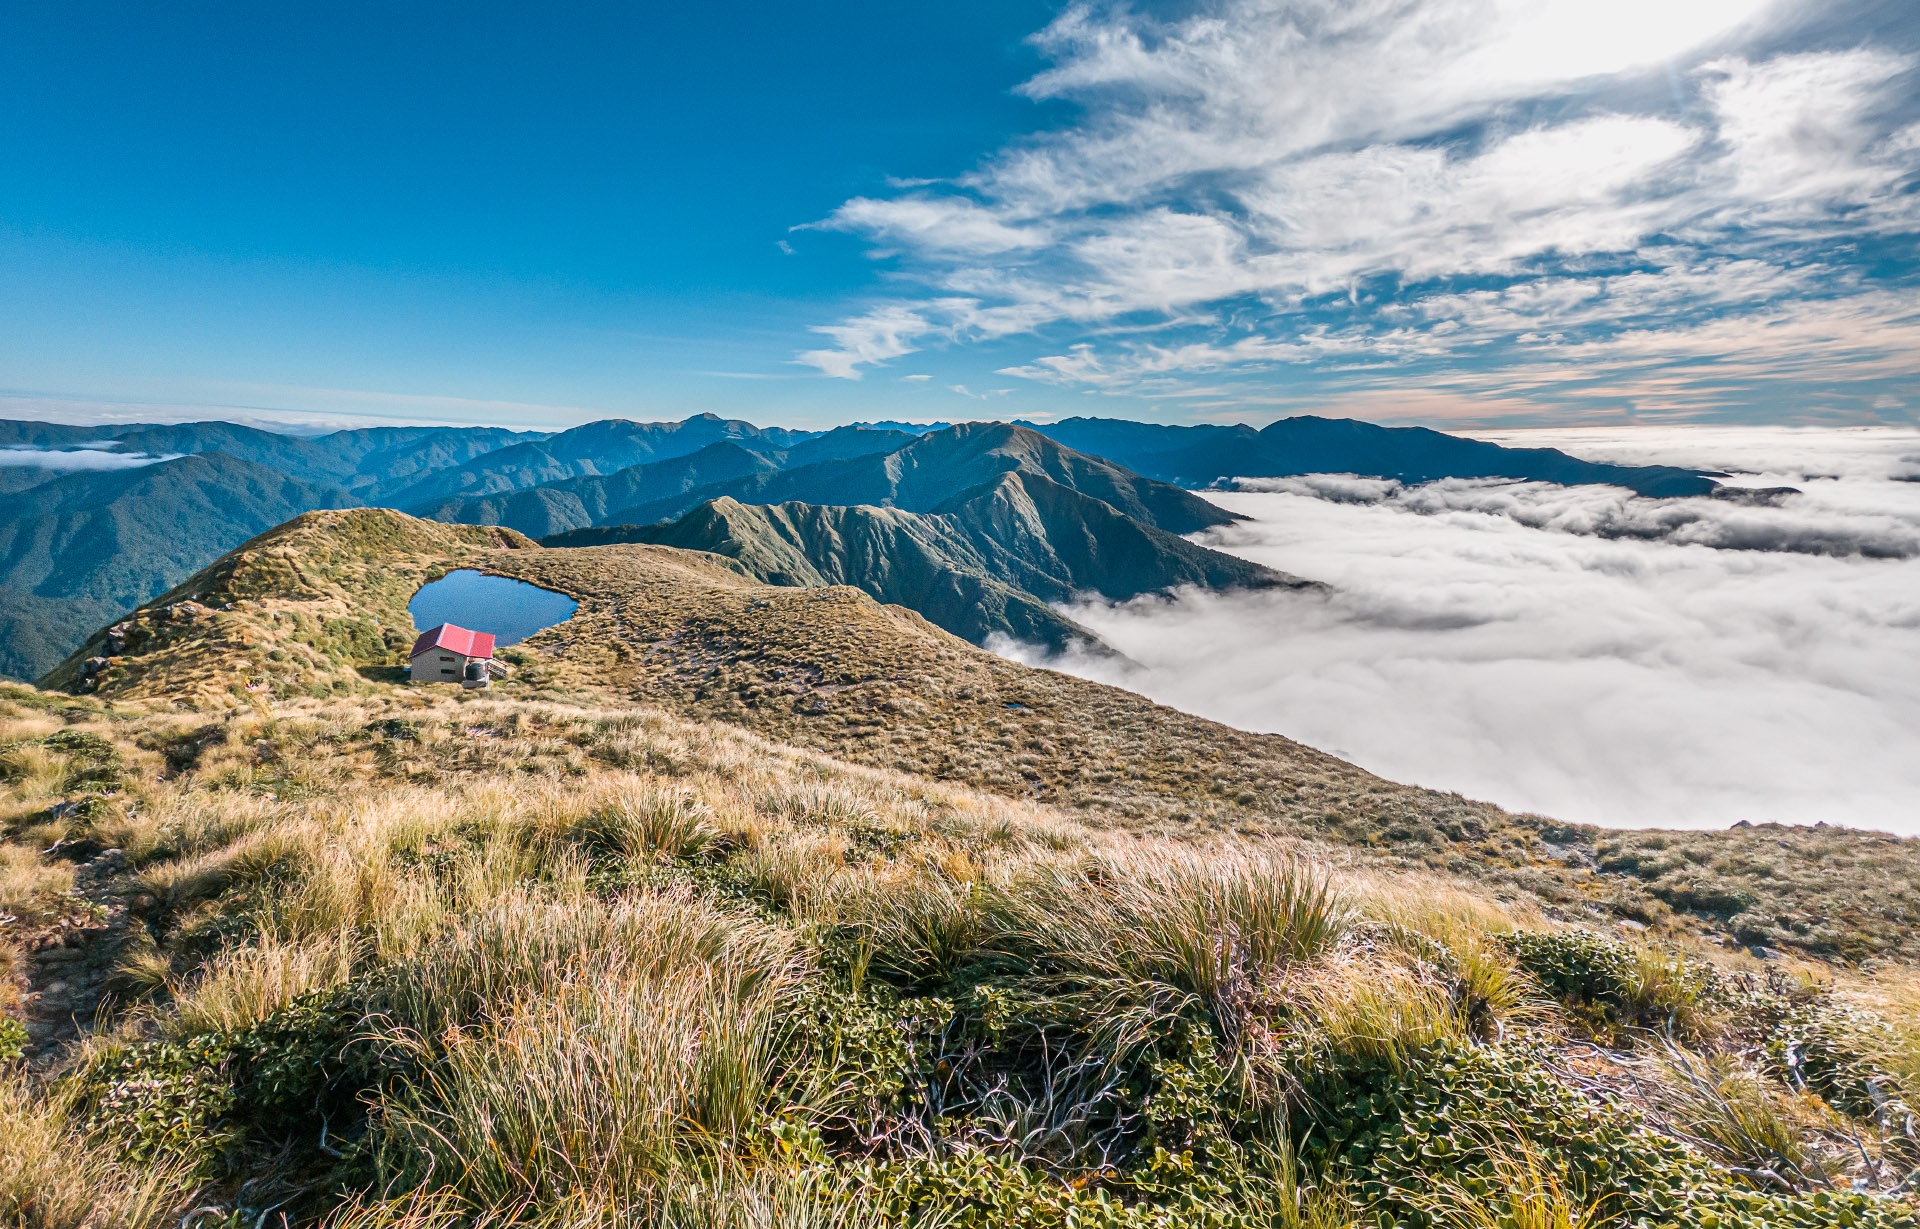 Maungahuka Hut above the clouds in the Tararua Range